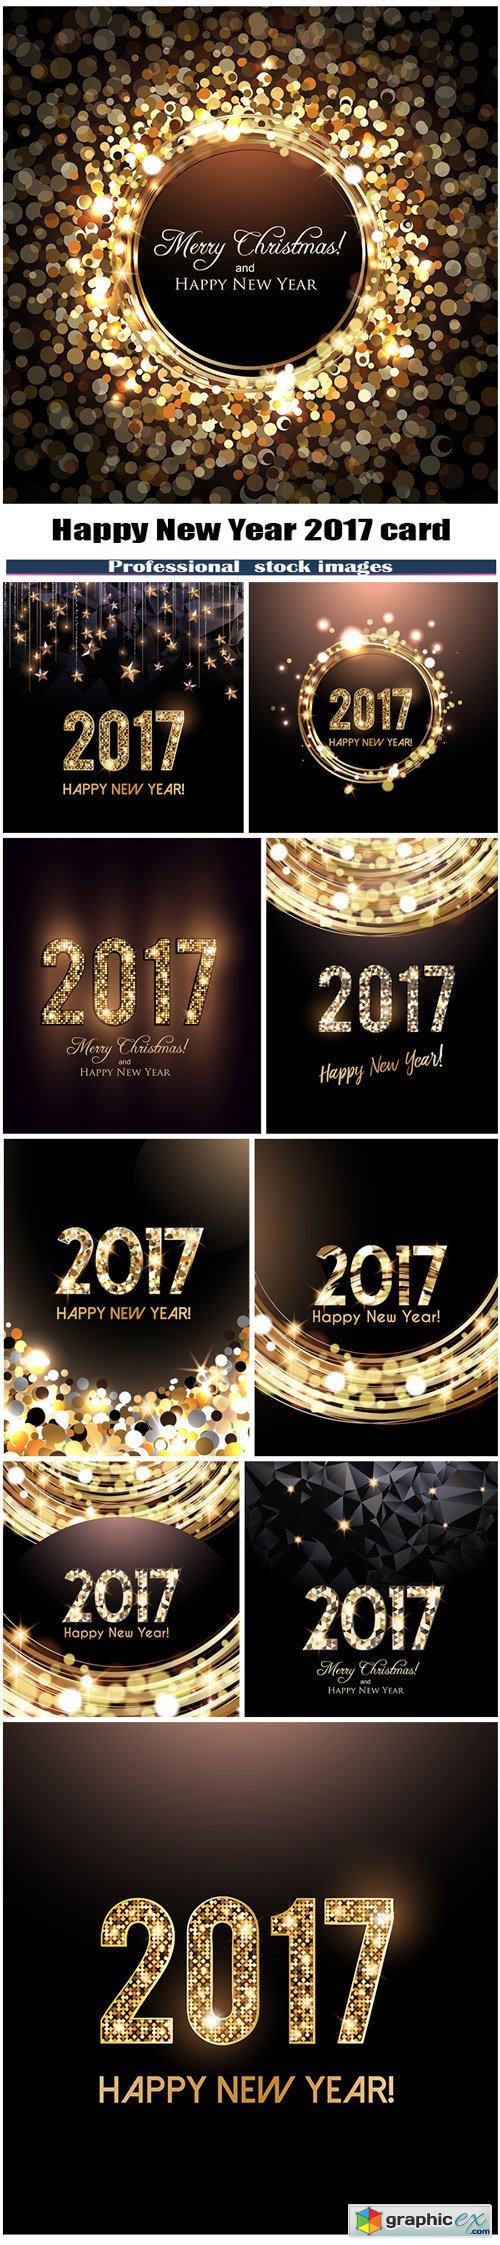 Happy New Year 2017 card